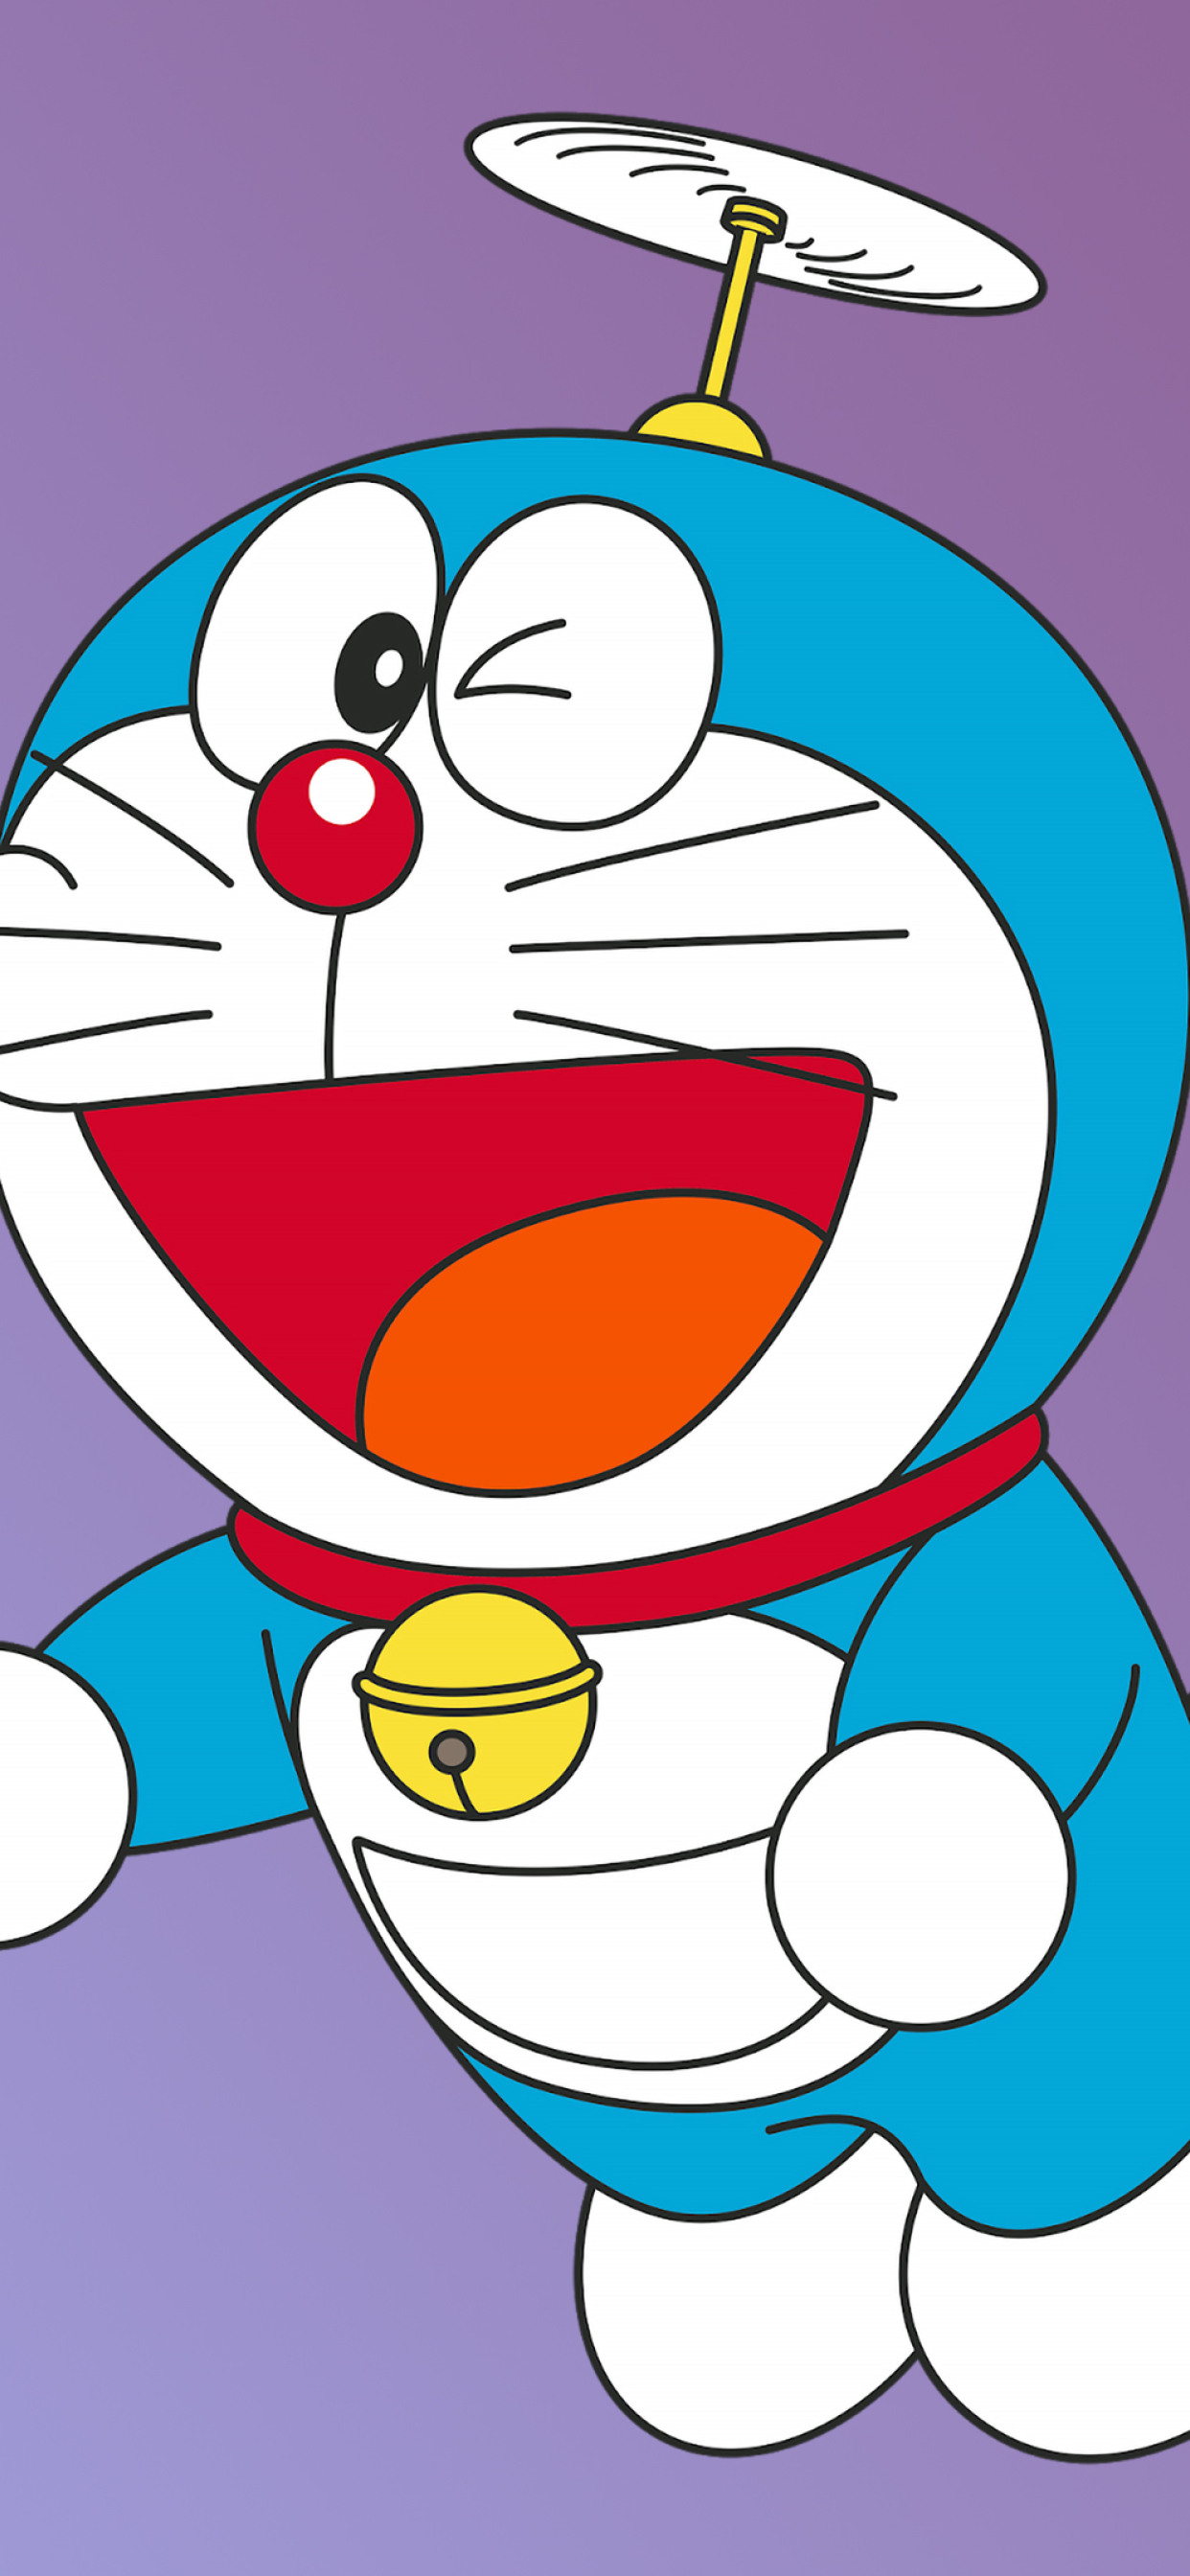 1242x26 Doraemon Minimal 4k Iphone Xs Max Wallpaper Hd Cartoon 4k Wallpapers Images Photos And Background Wallpapers Den